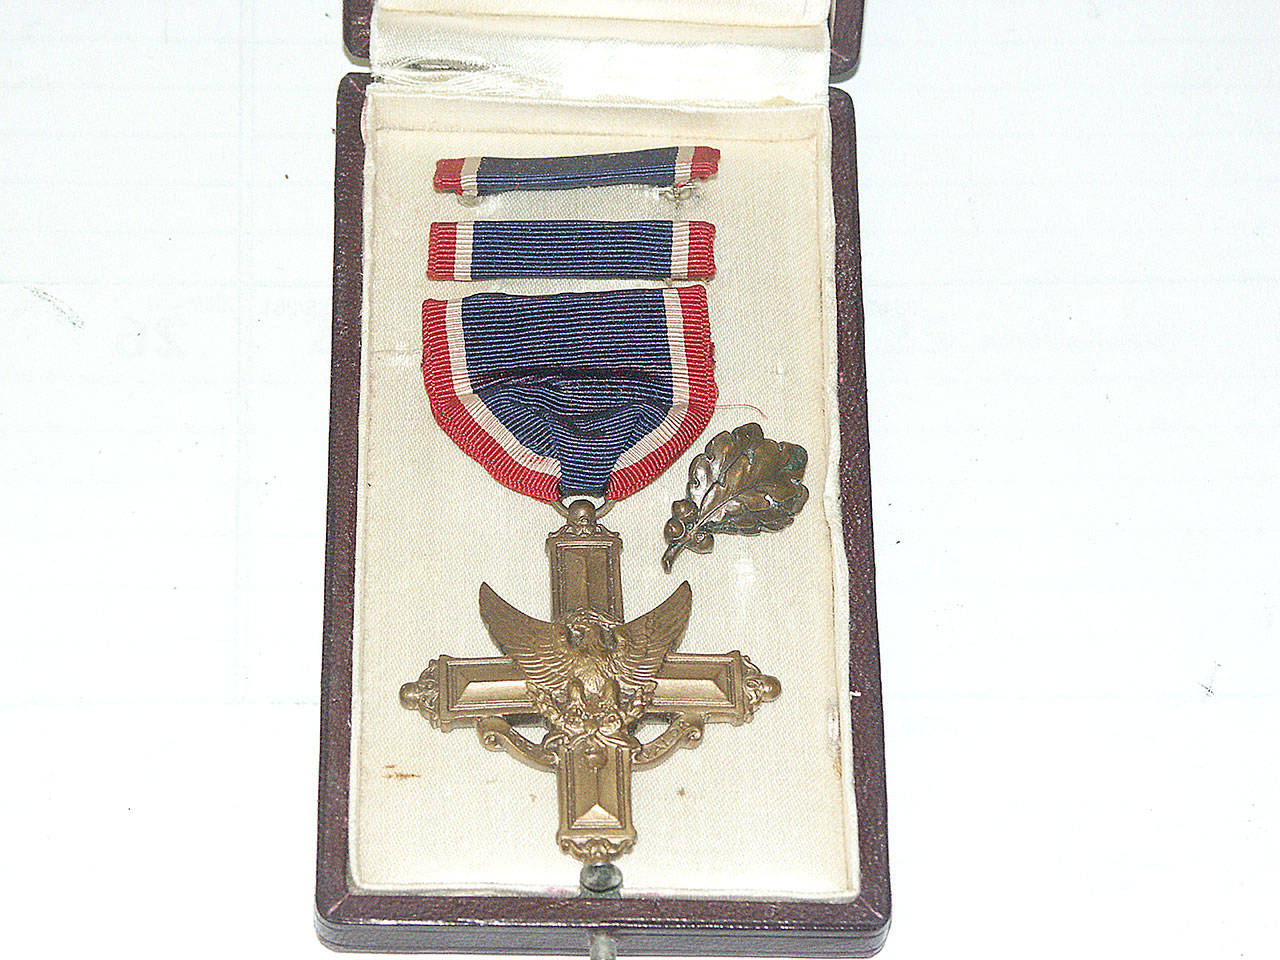 Capt. English’s Distinguised Service Cross, and oak leaf symbolizing his second reception of the honor. Photo courtesy Steven Kobylk.